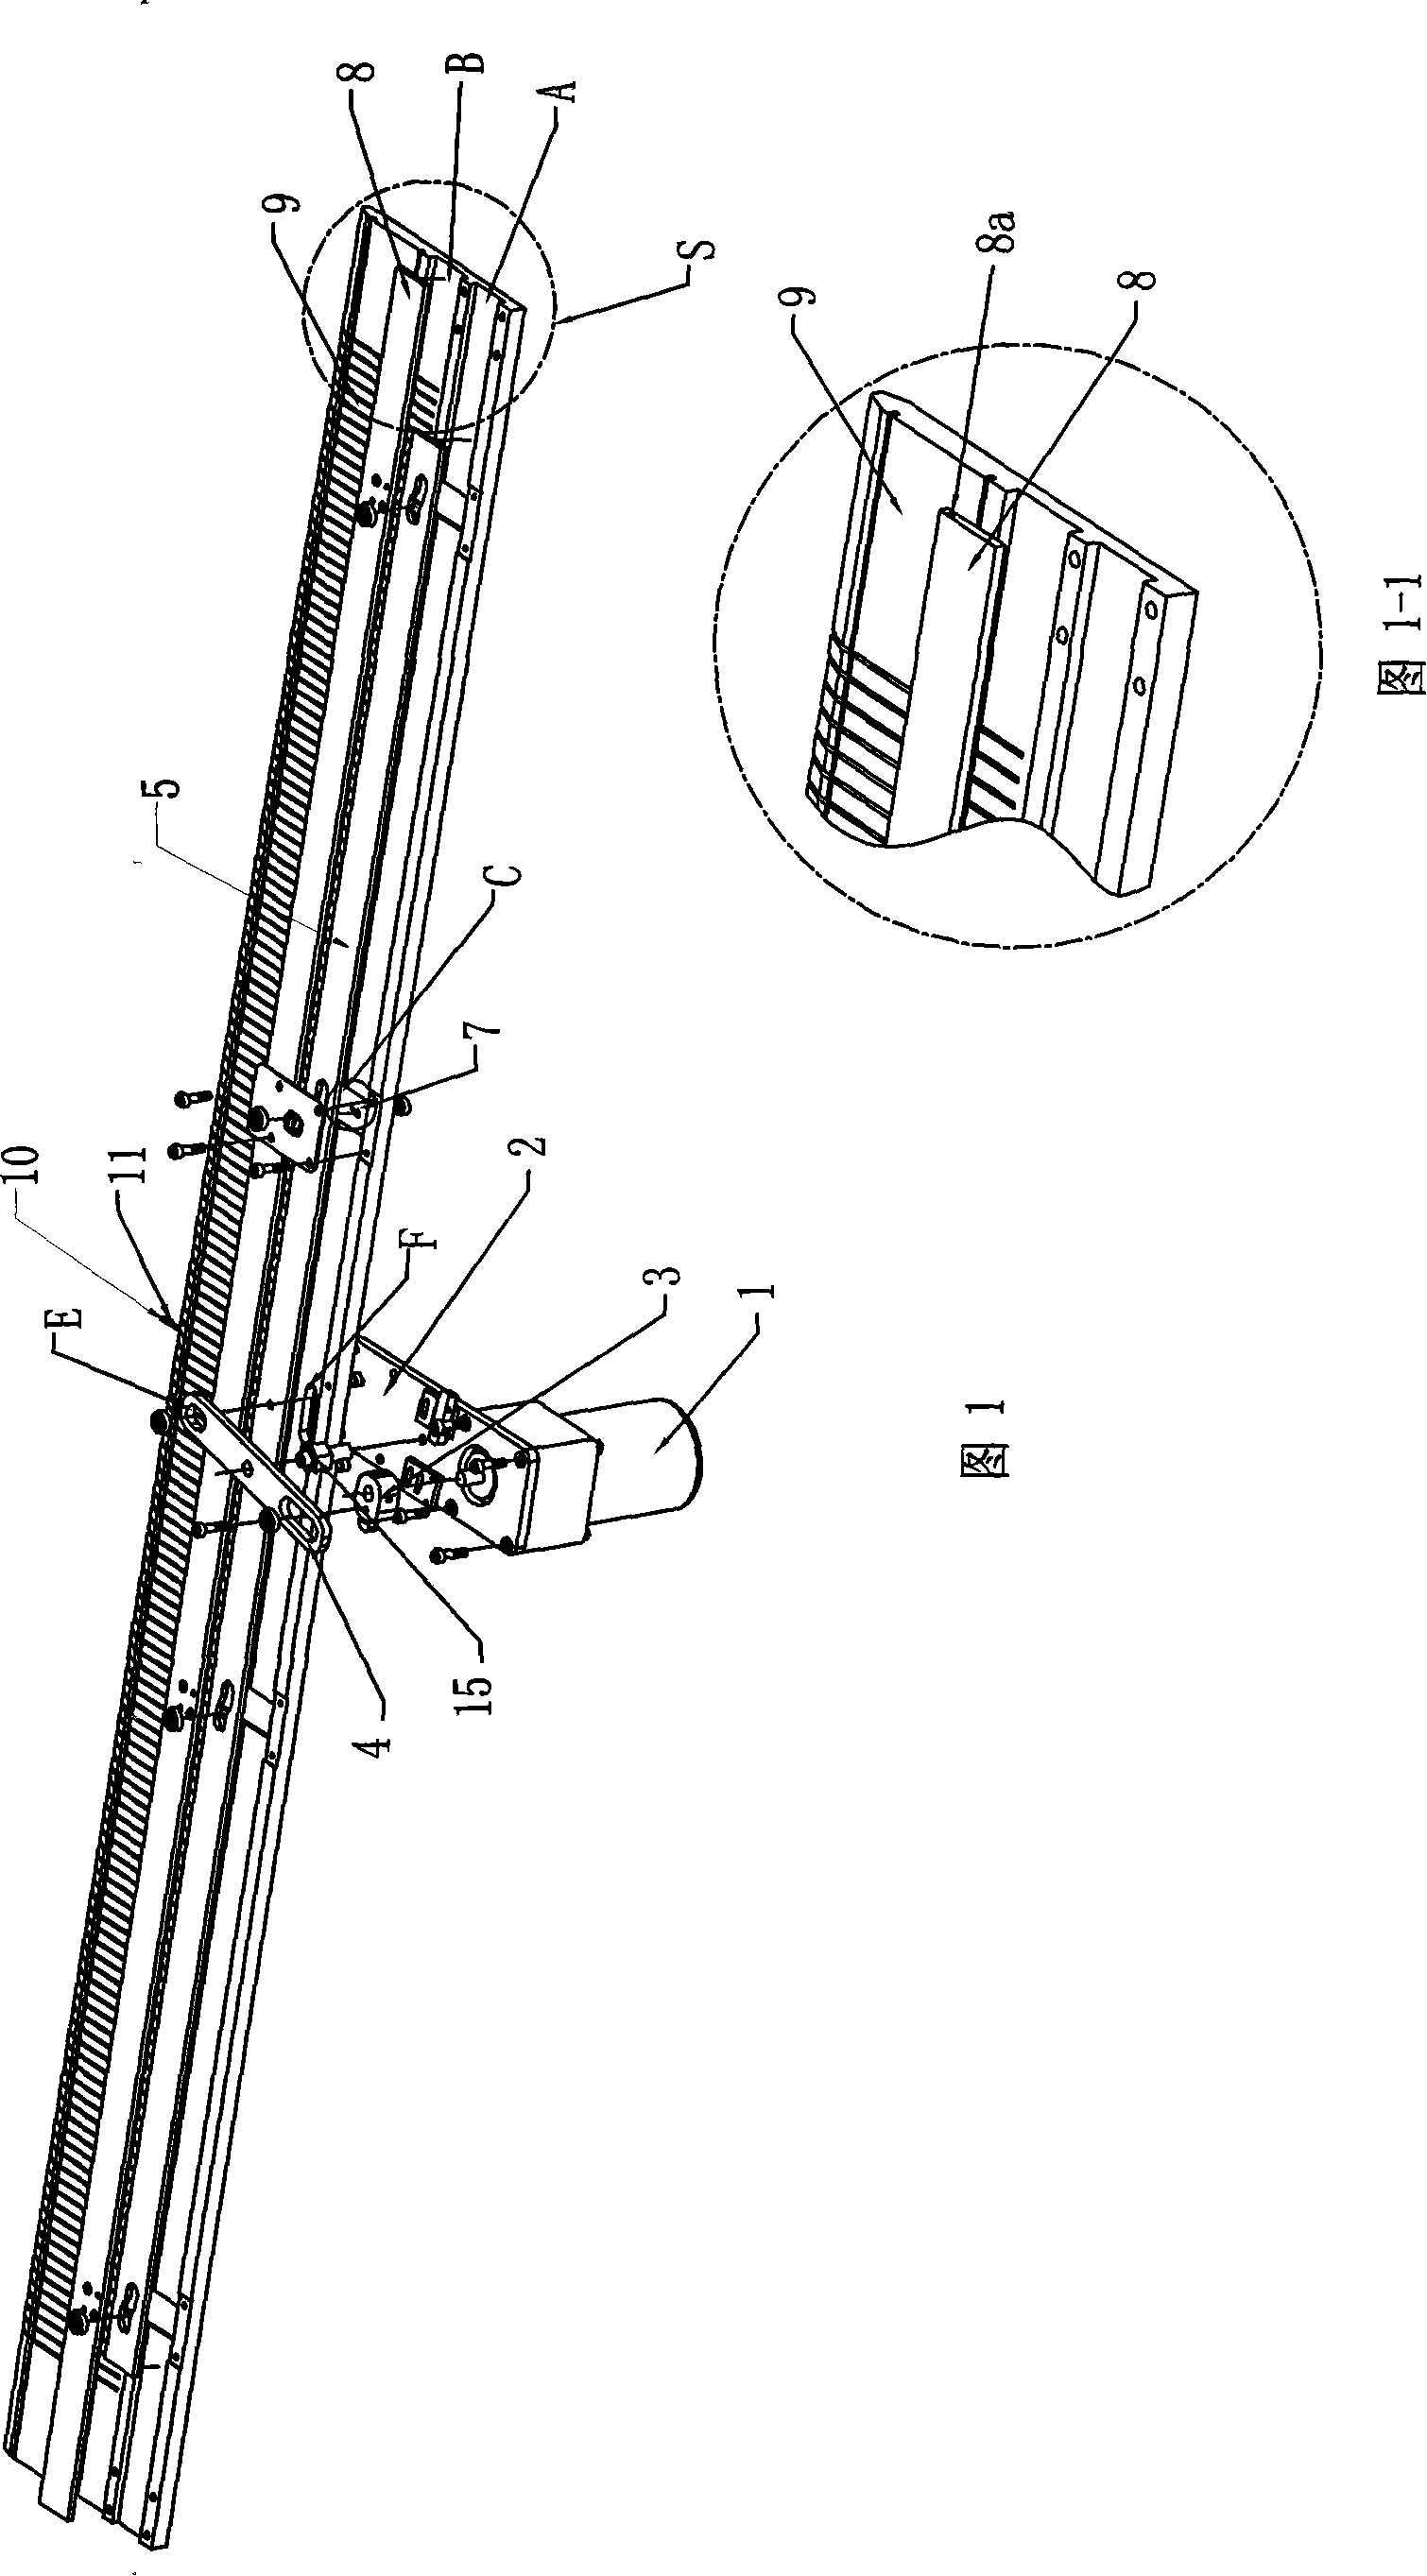 Bottom rising device of knitting horizontal machine